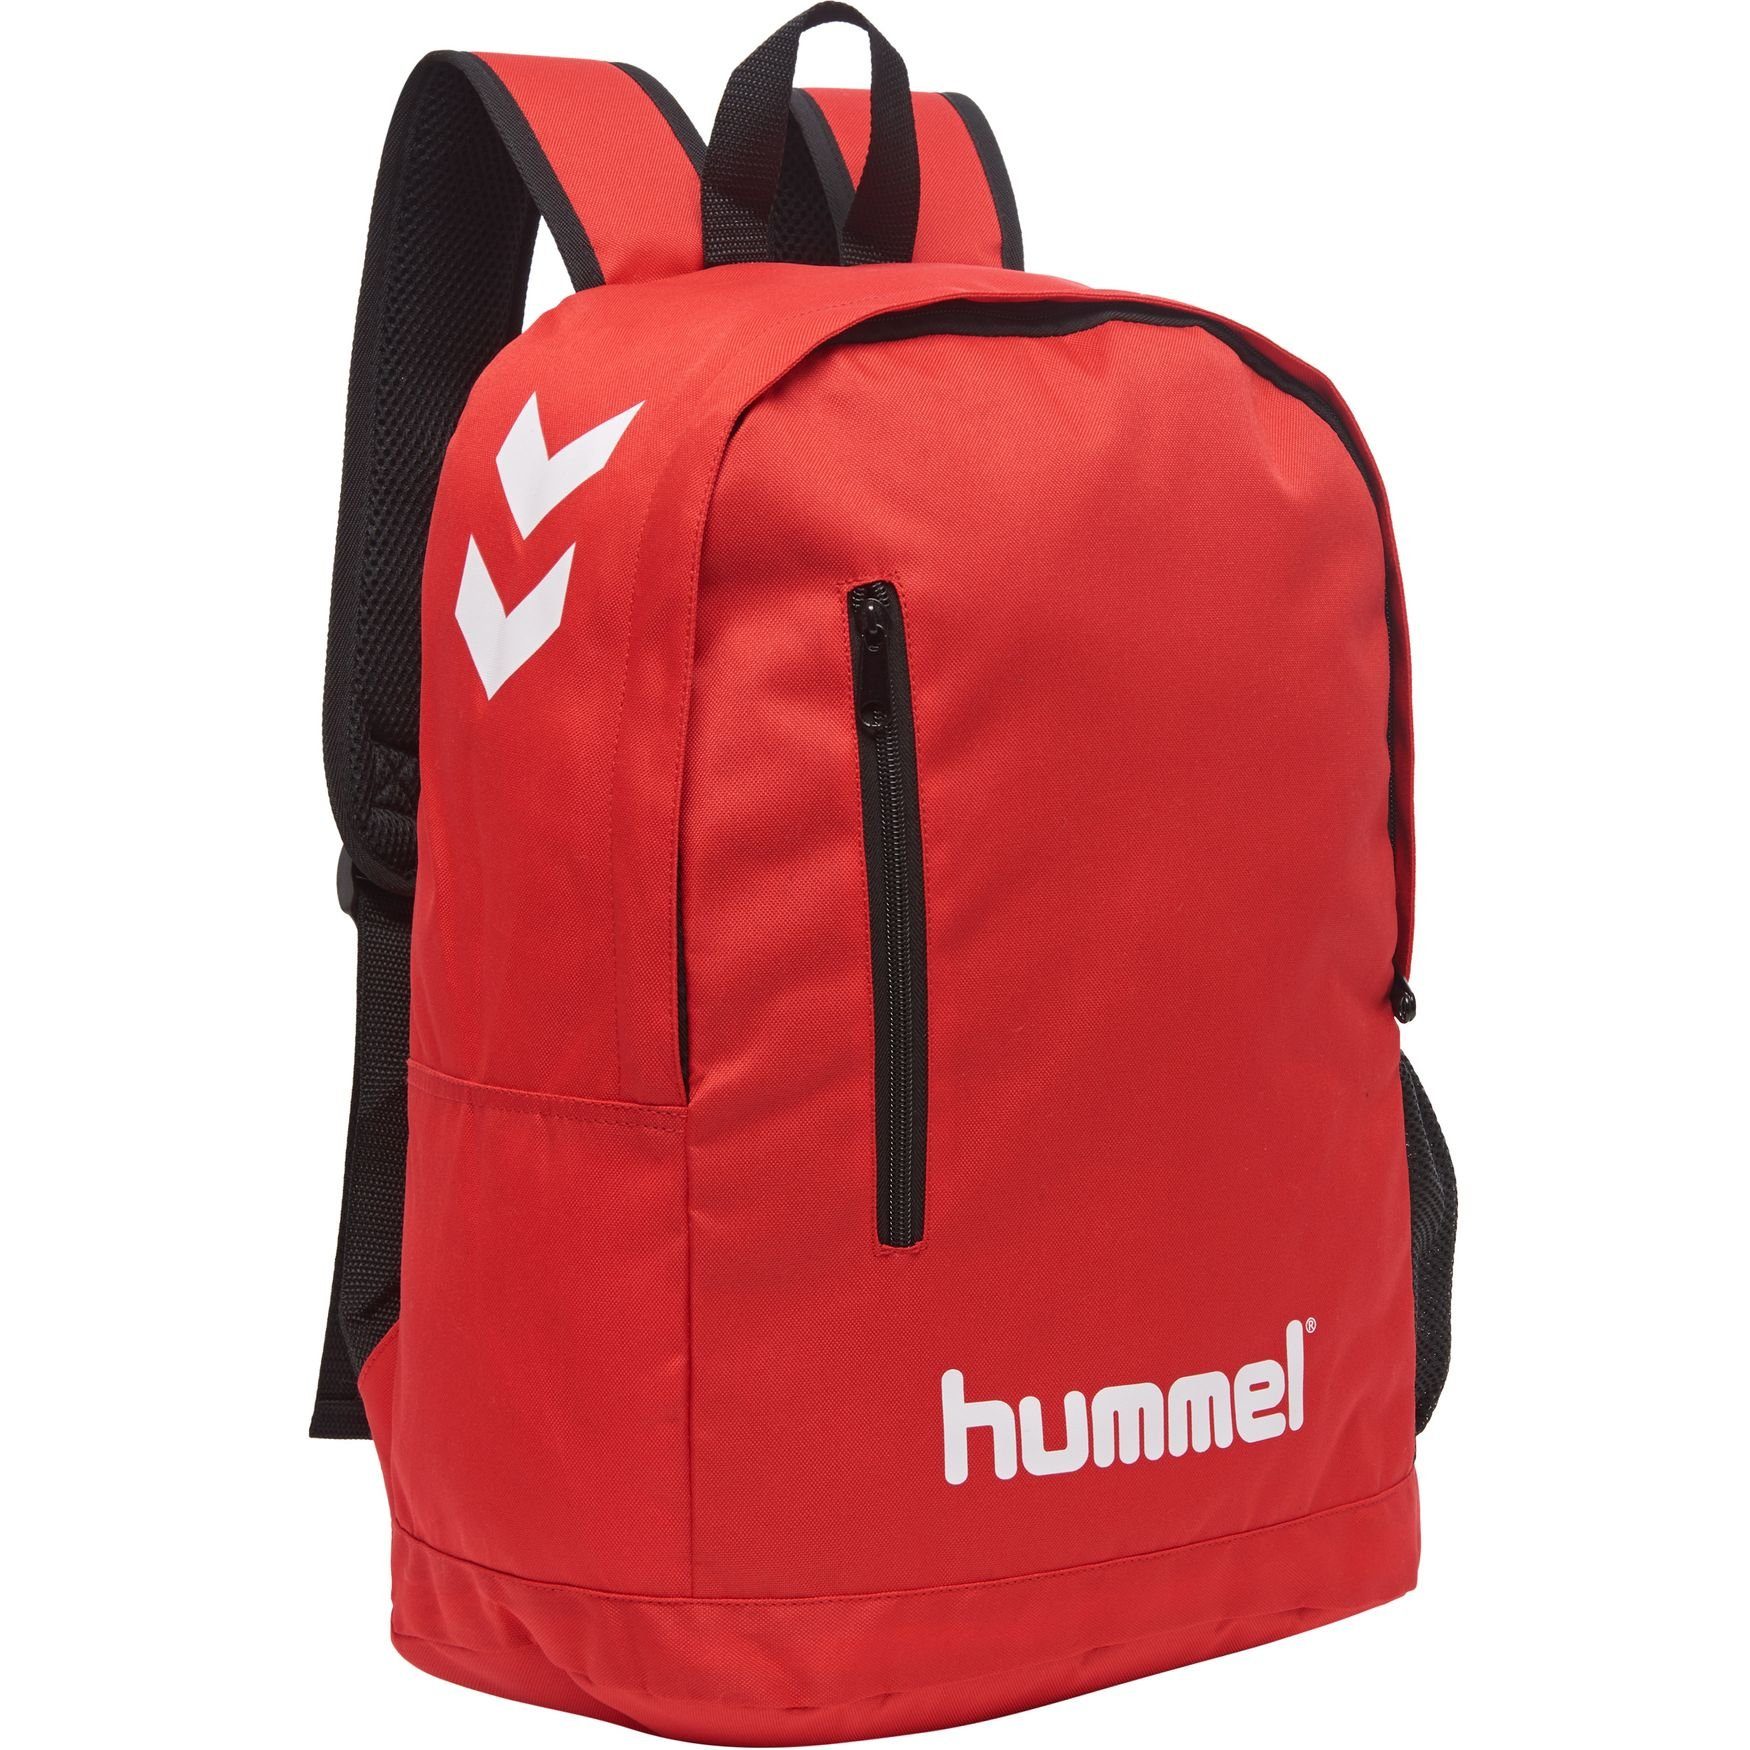 hummel Rucksack Basic Rucksack Ranzen mit Laptop Fach Tasche CORE BACK PACK (casual), 5146 in Rot